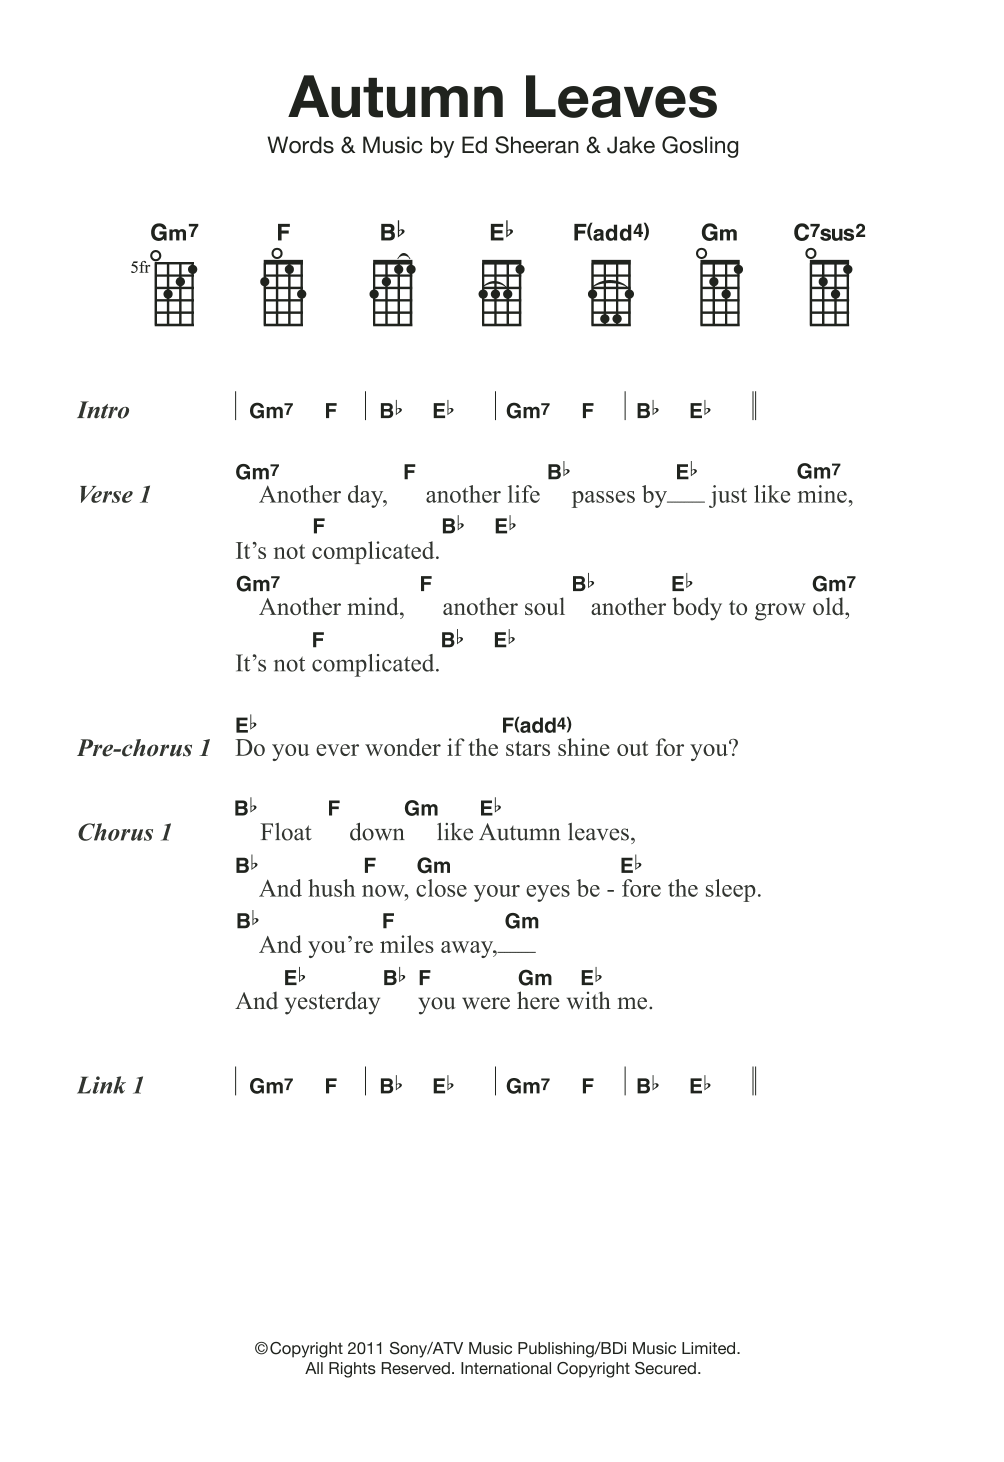 Ed Sheeran Autumn Leaves Sheet Music Notes & Chords for Ukulele - Download or Print PDF